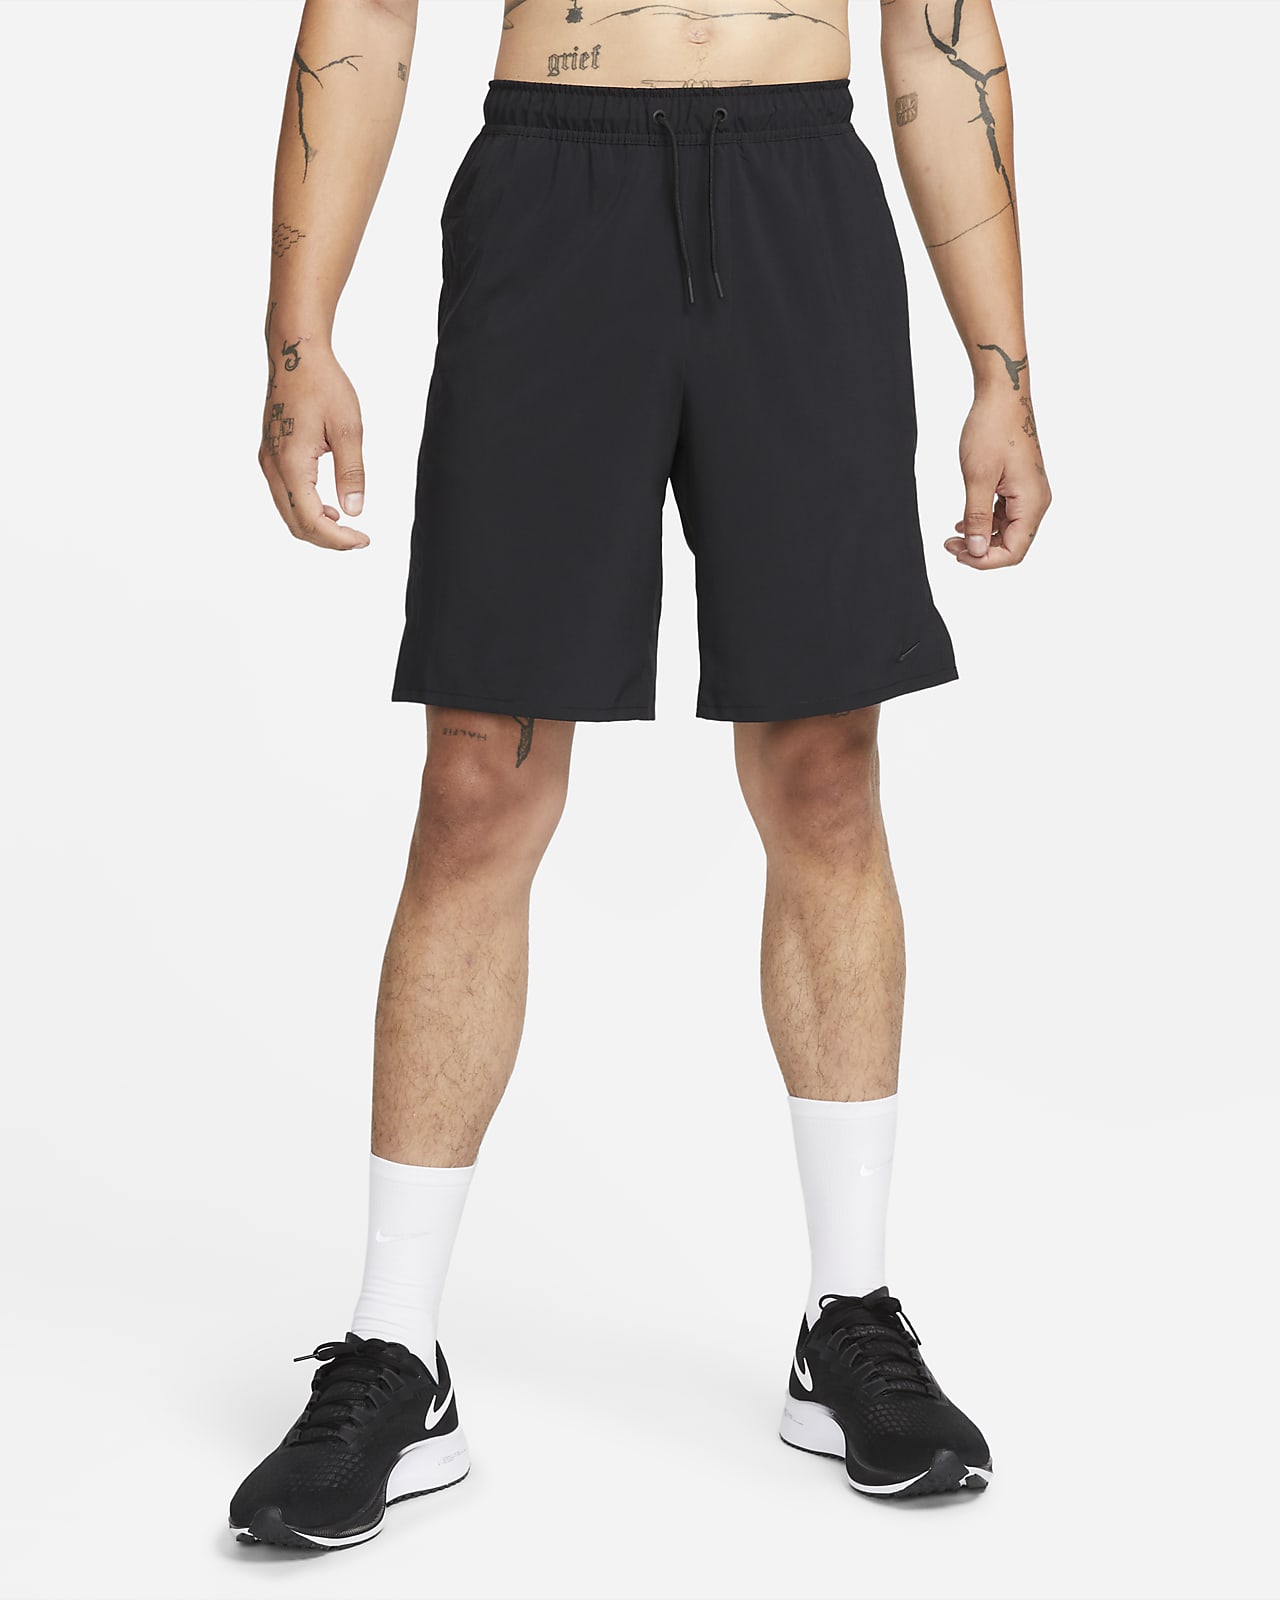 Nike Unlimited Pantalón corto versátil Dri-FIT de 23 cm sin forro - Hombre